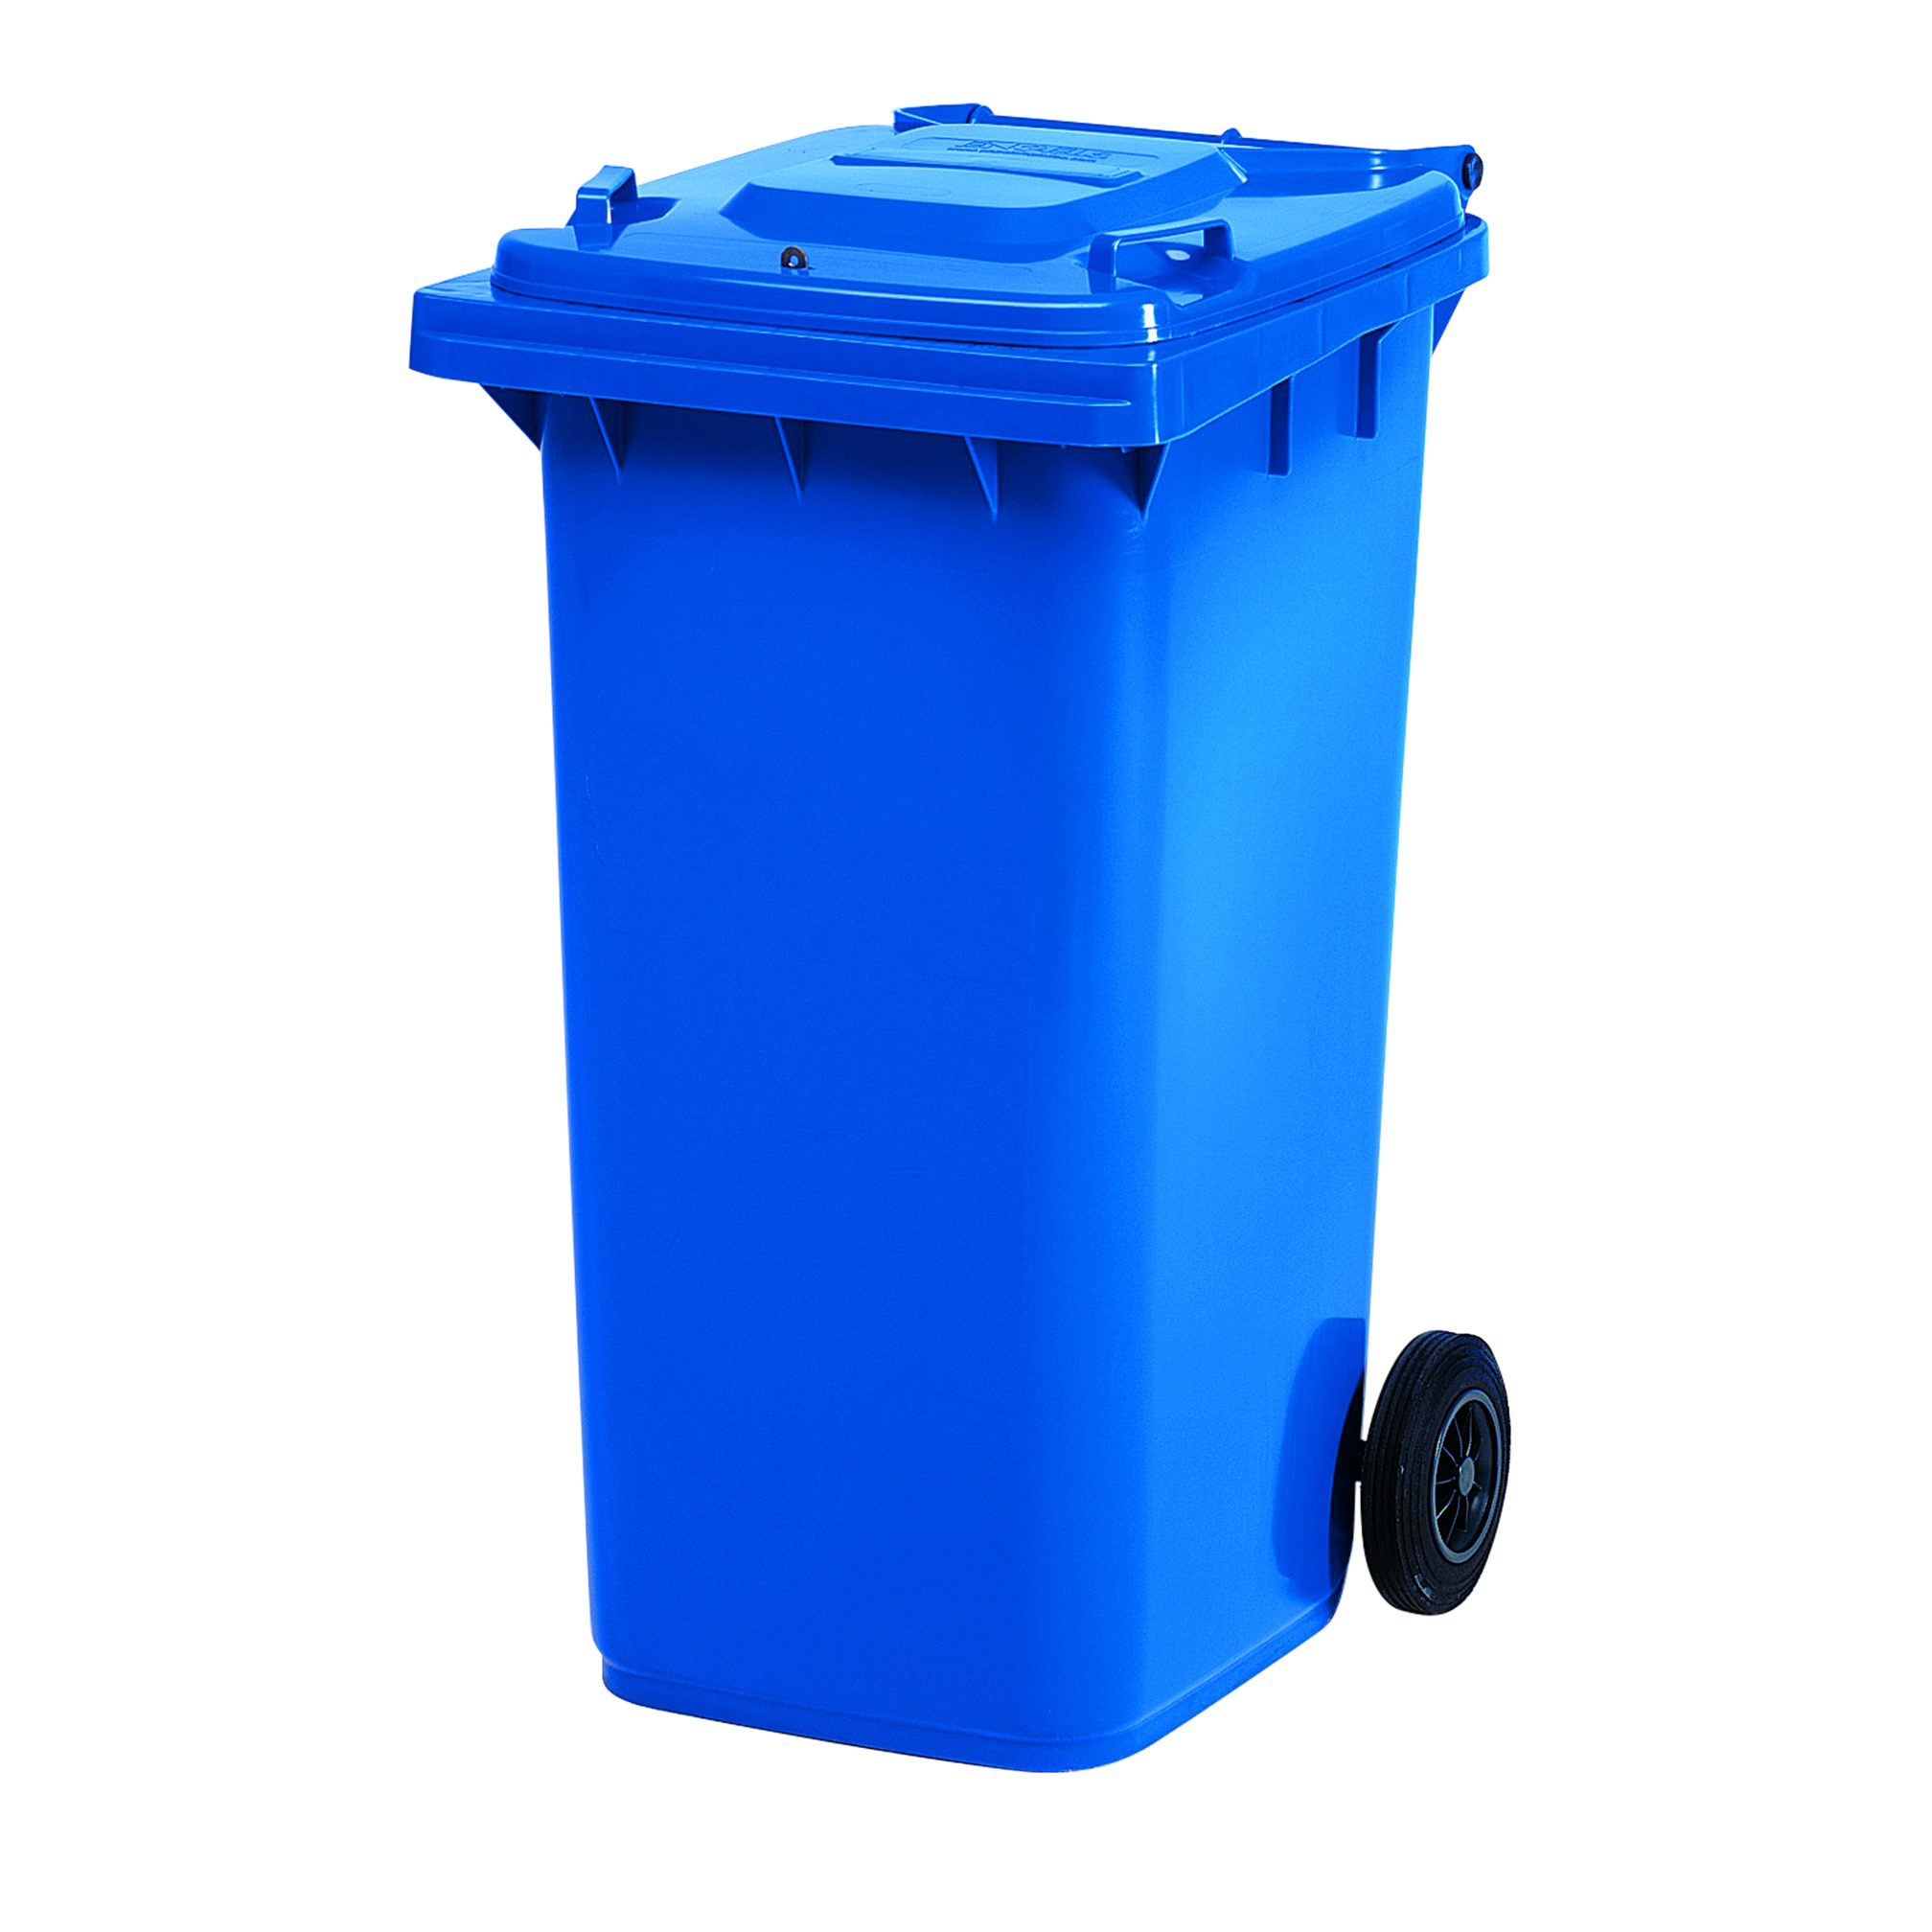 Plastic mobile storage container, blue